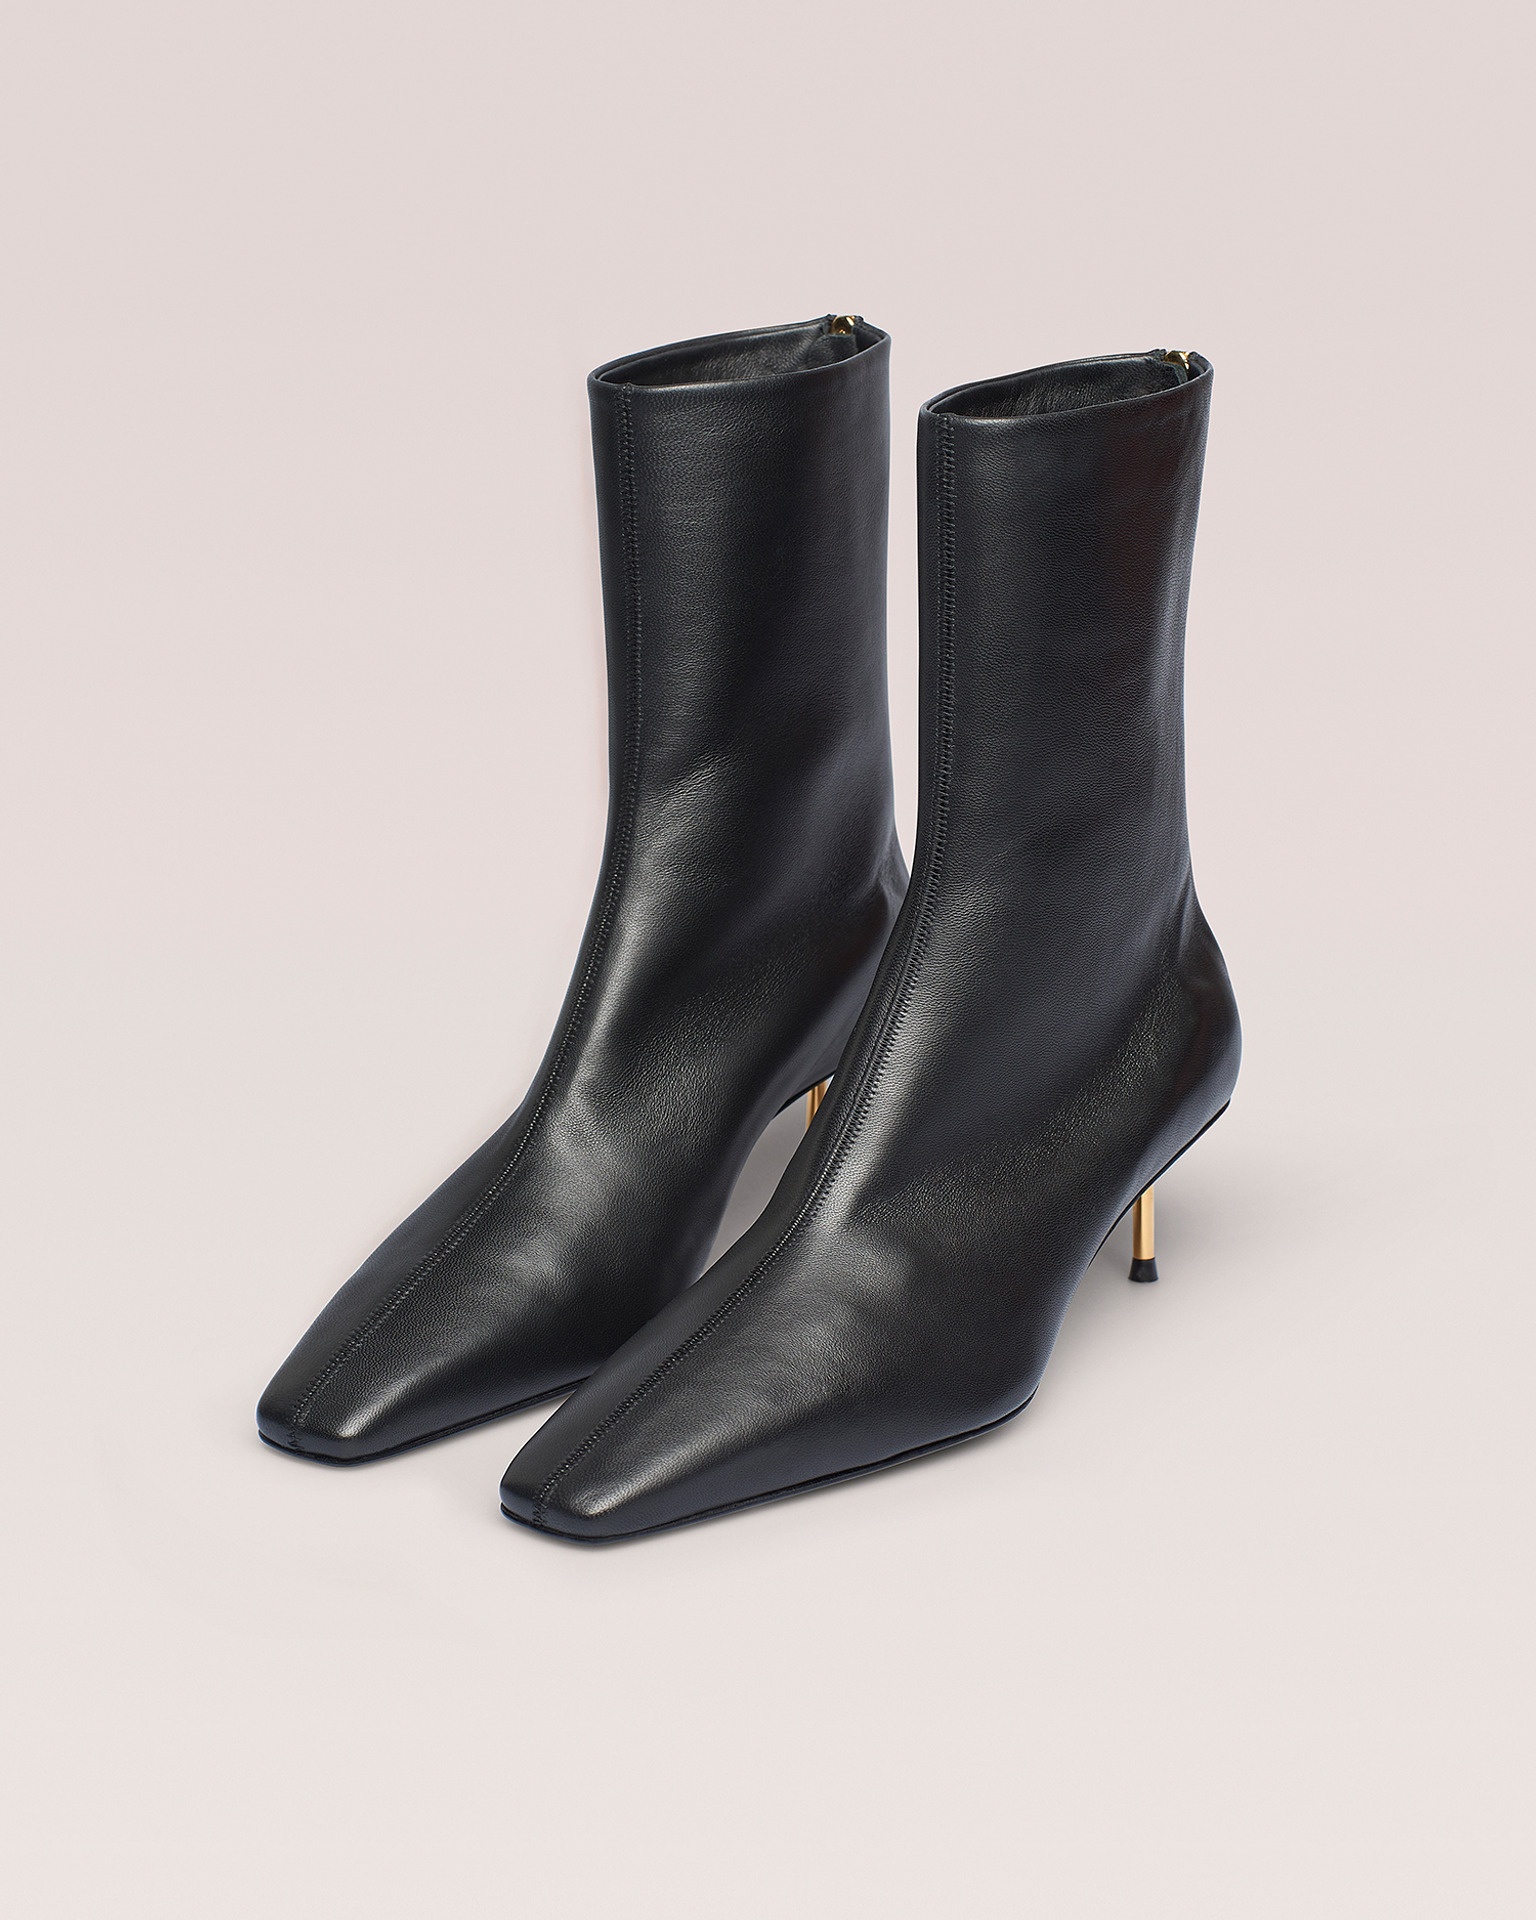 TALLI - Elongated square toe booties with metal heels - Black - 3